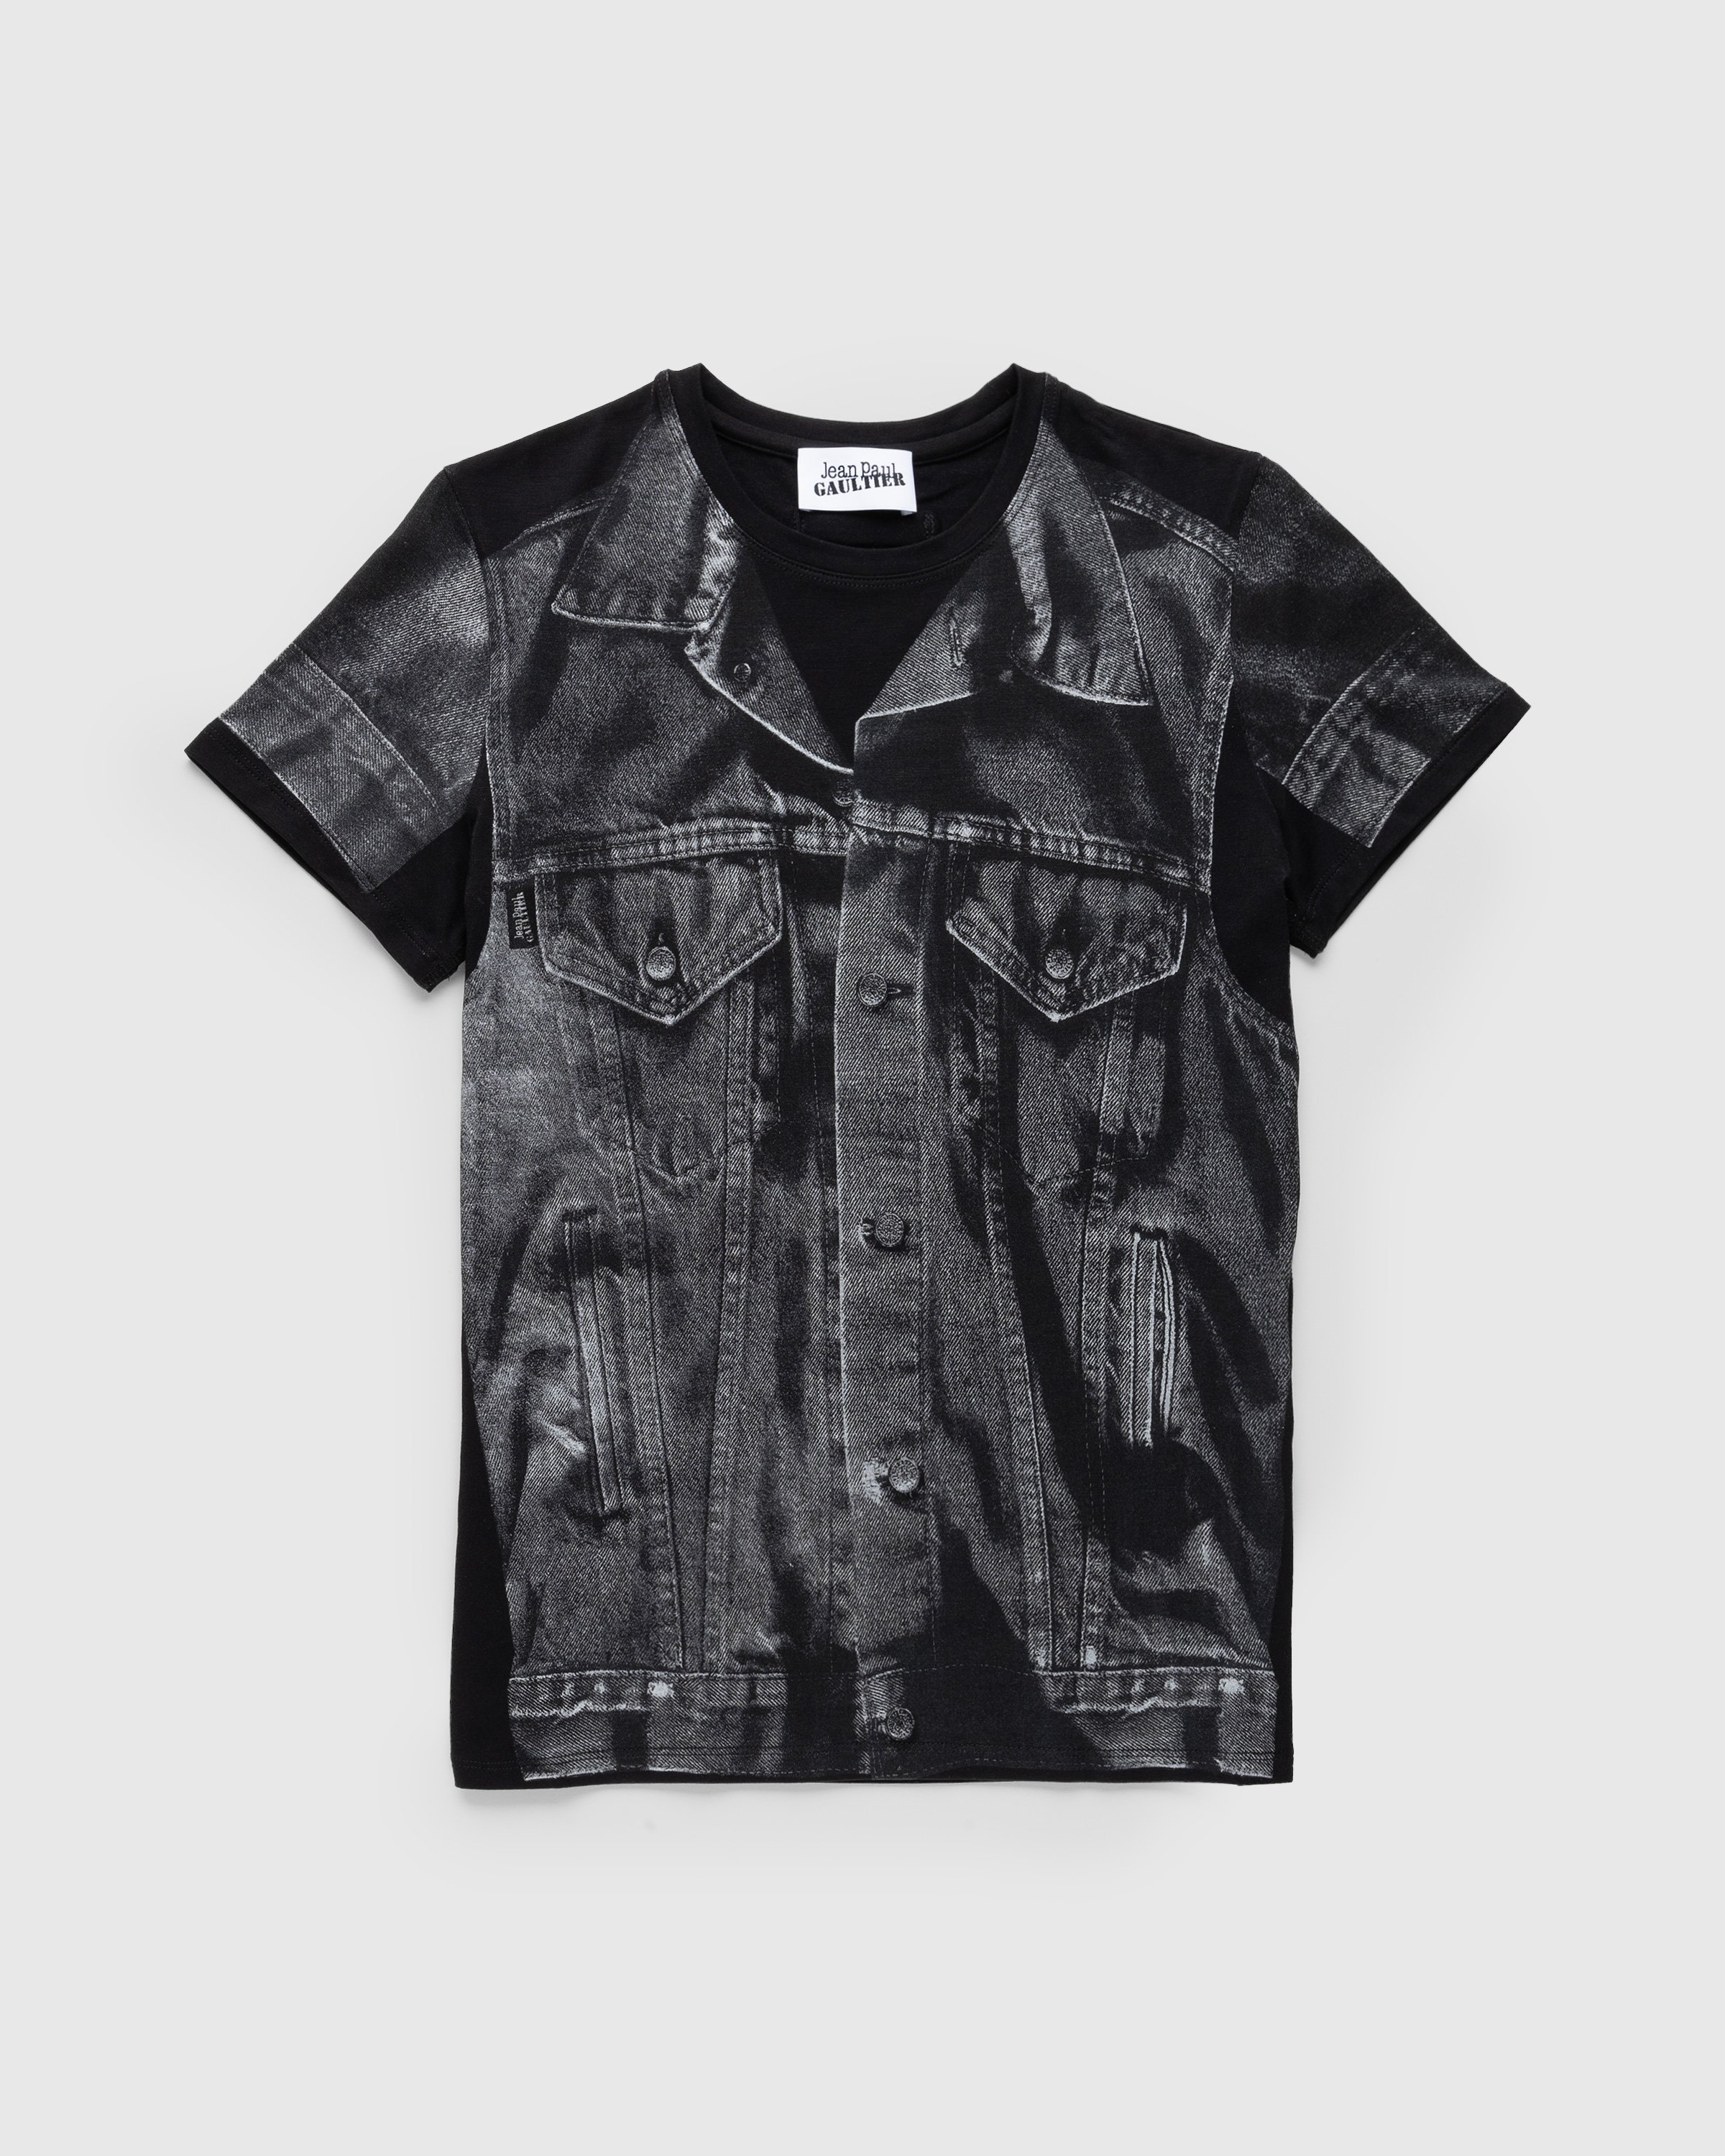 Jean Paul Gaultier - Denim Trompe L'oeil T-Shirt Black/Gray - Clothing - Black - Image 1